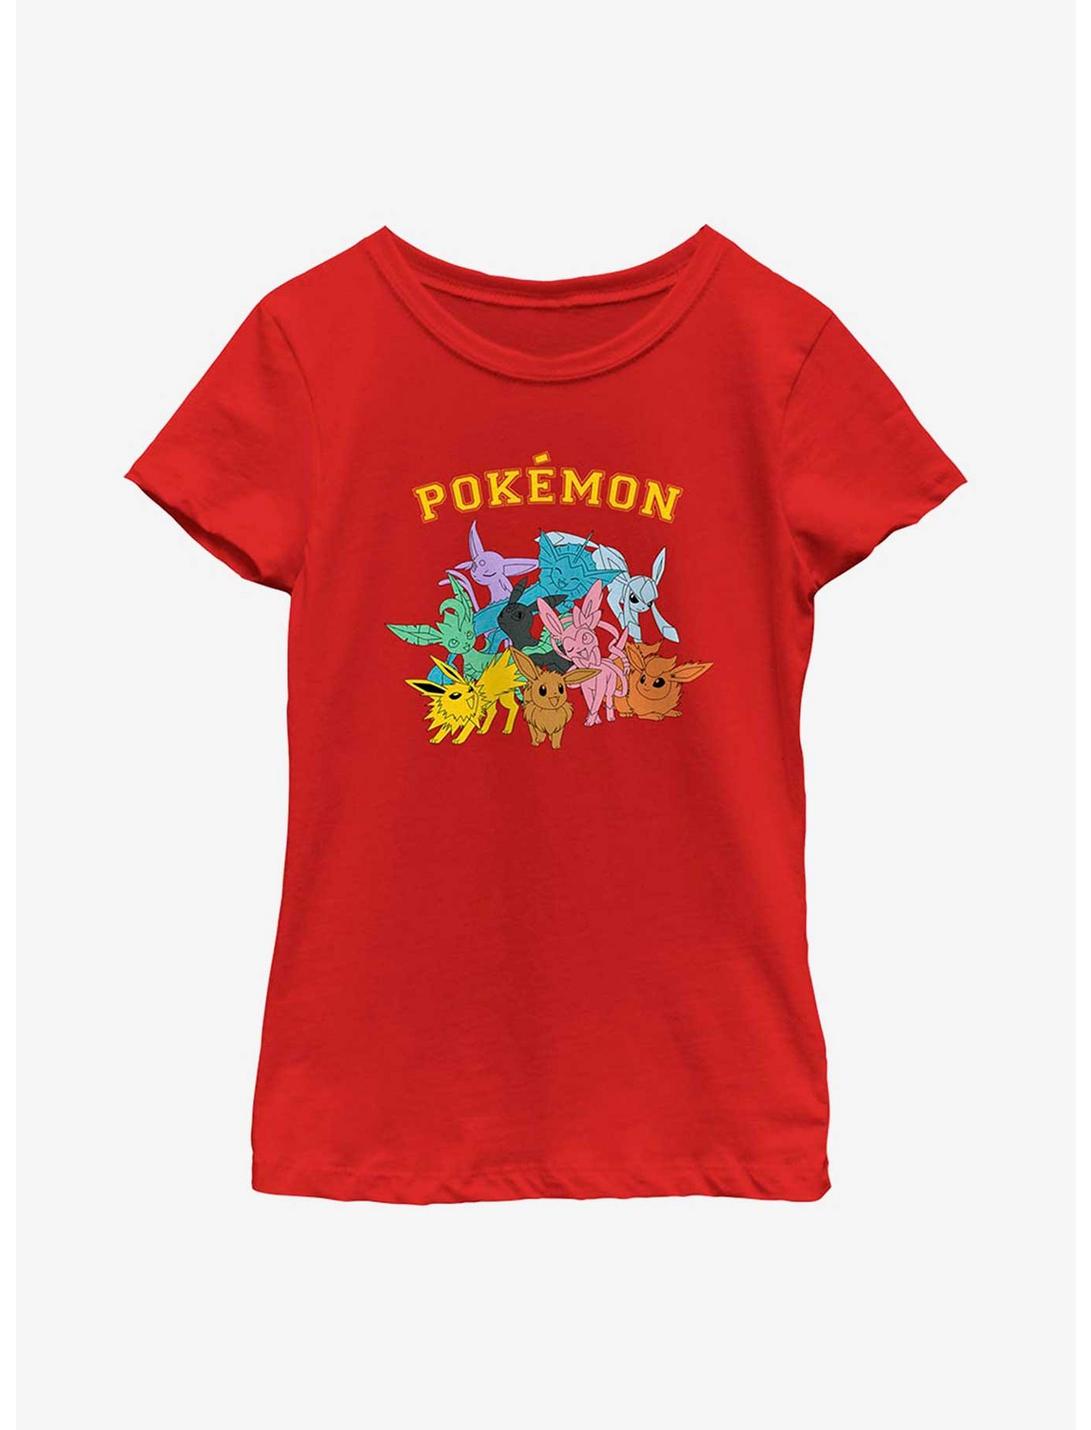 Pokémon Gotta Catch Eeveelutions Youth Girls T-Shirt, RED, hi-res